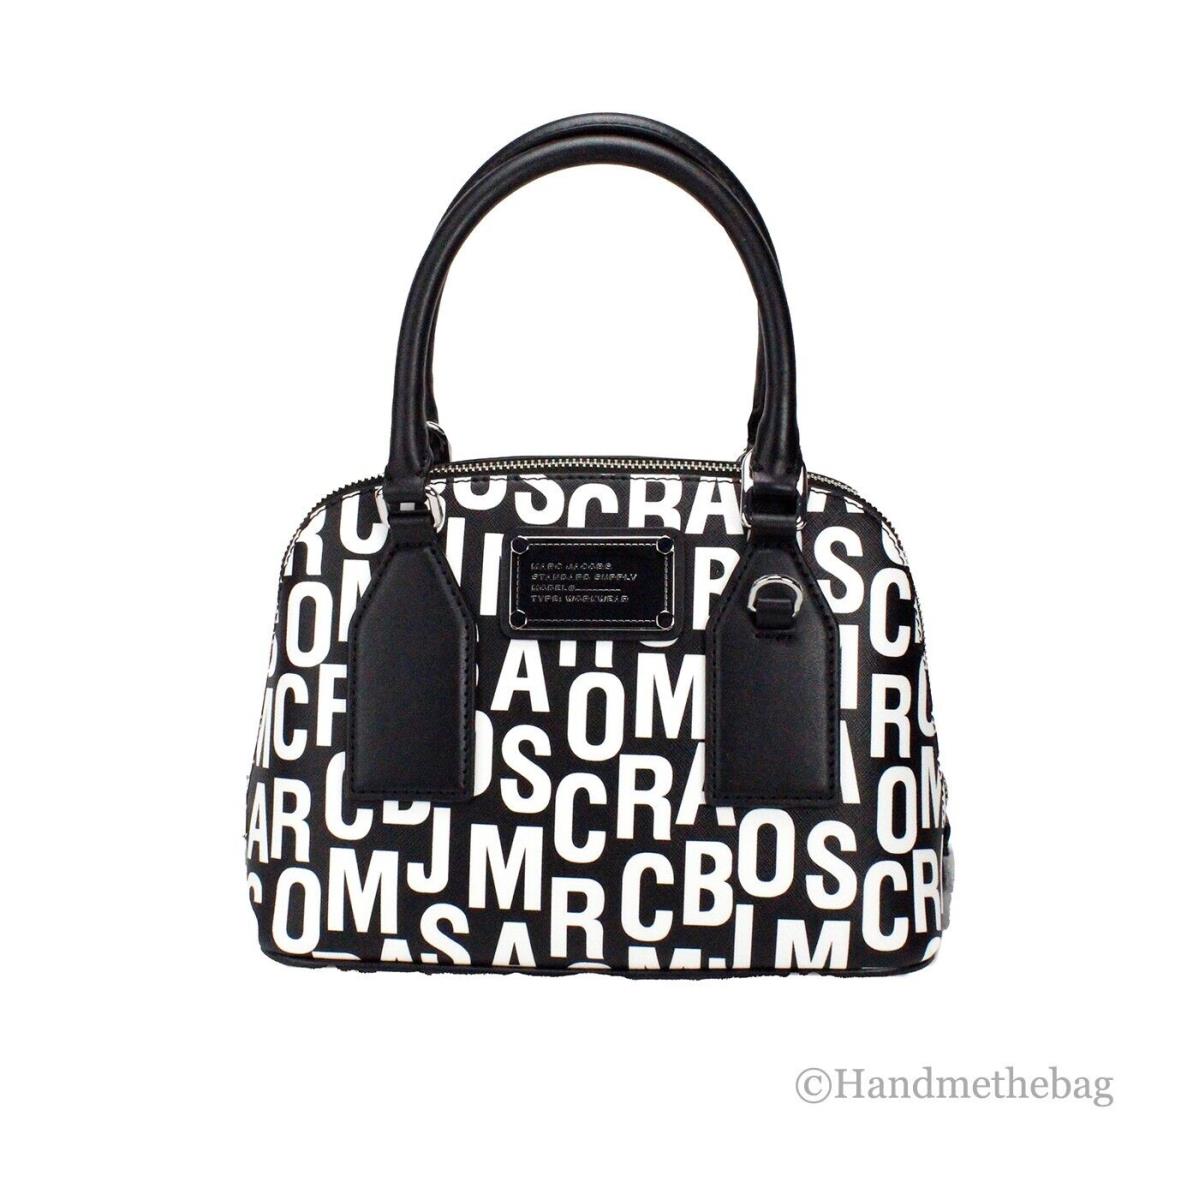 Marc Jacobs Small Monogram Printed Saffiano Leather Dome Satchel Crossbody Bag